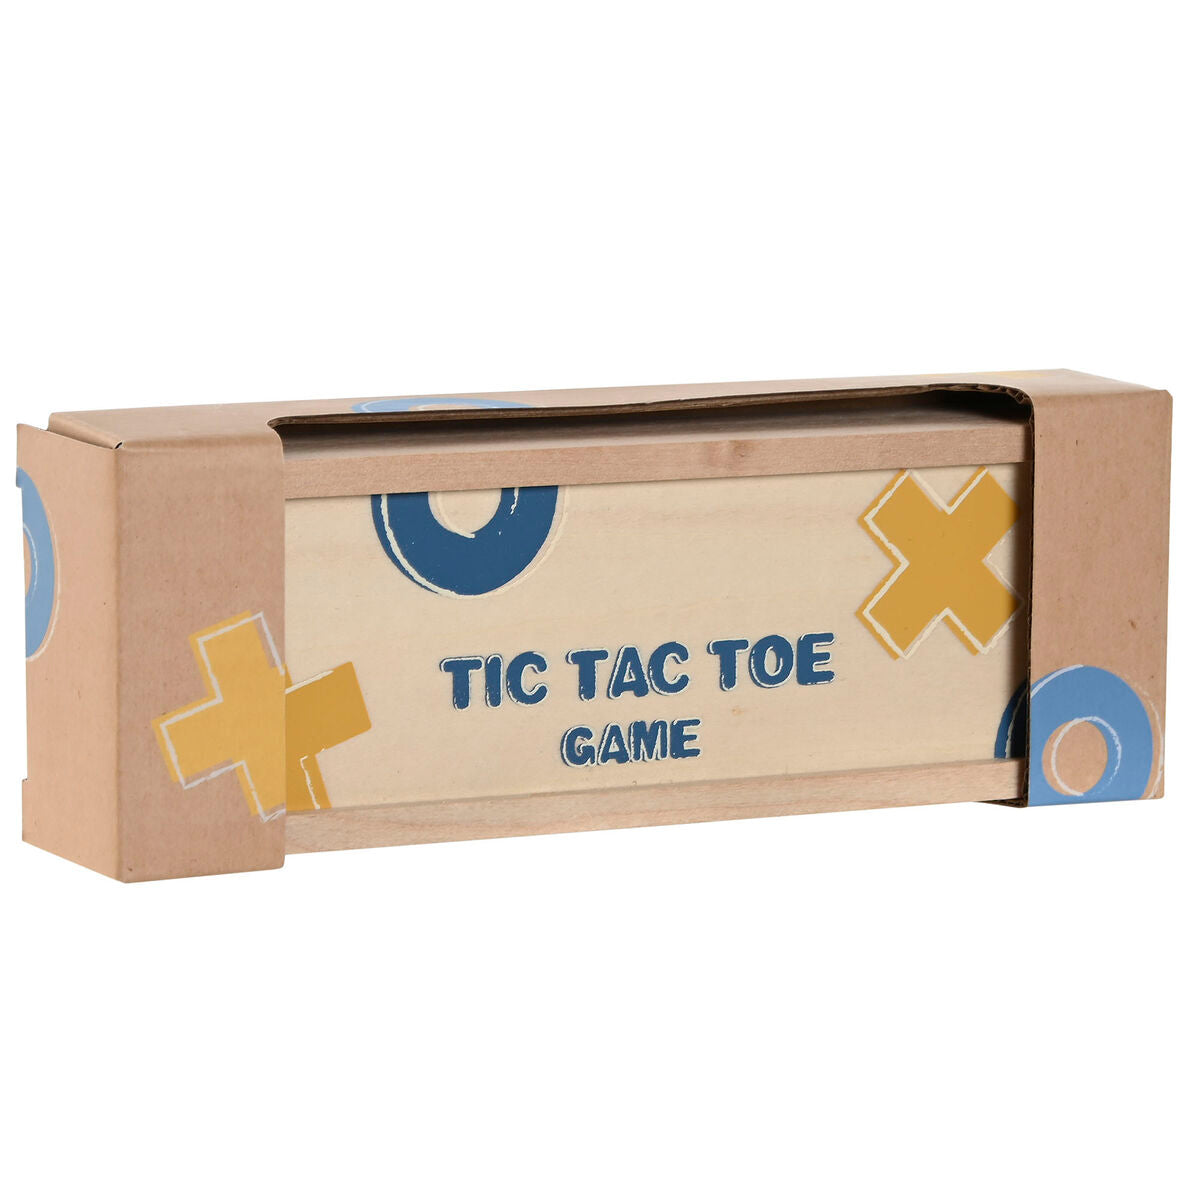 Three-in-a-Row Game Home ESPRIT Tic Tac Toe 18 x 6 x 3 cm